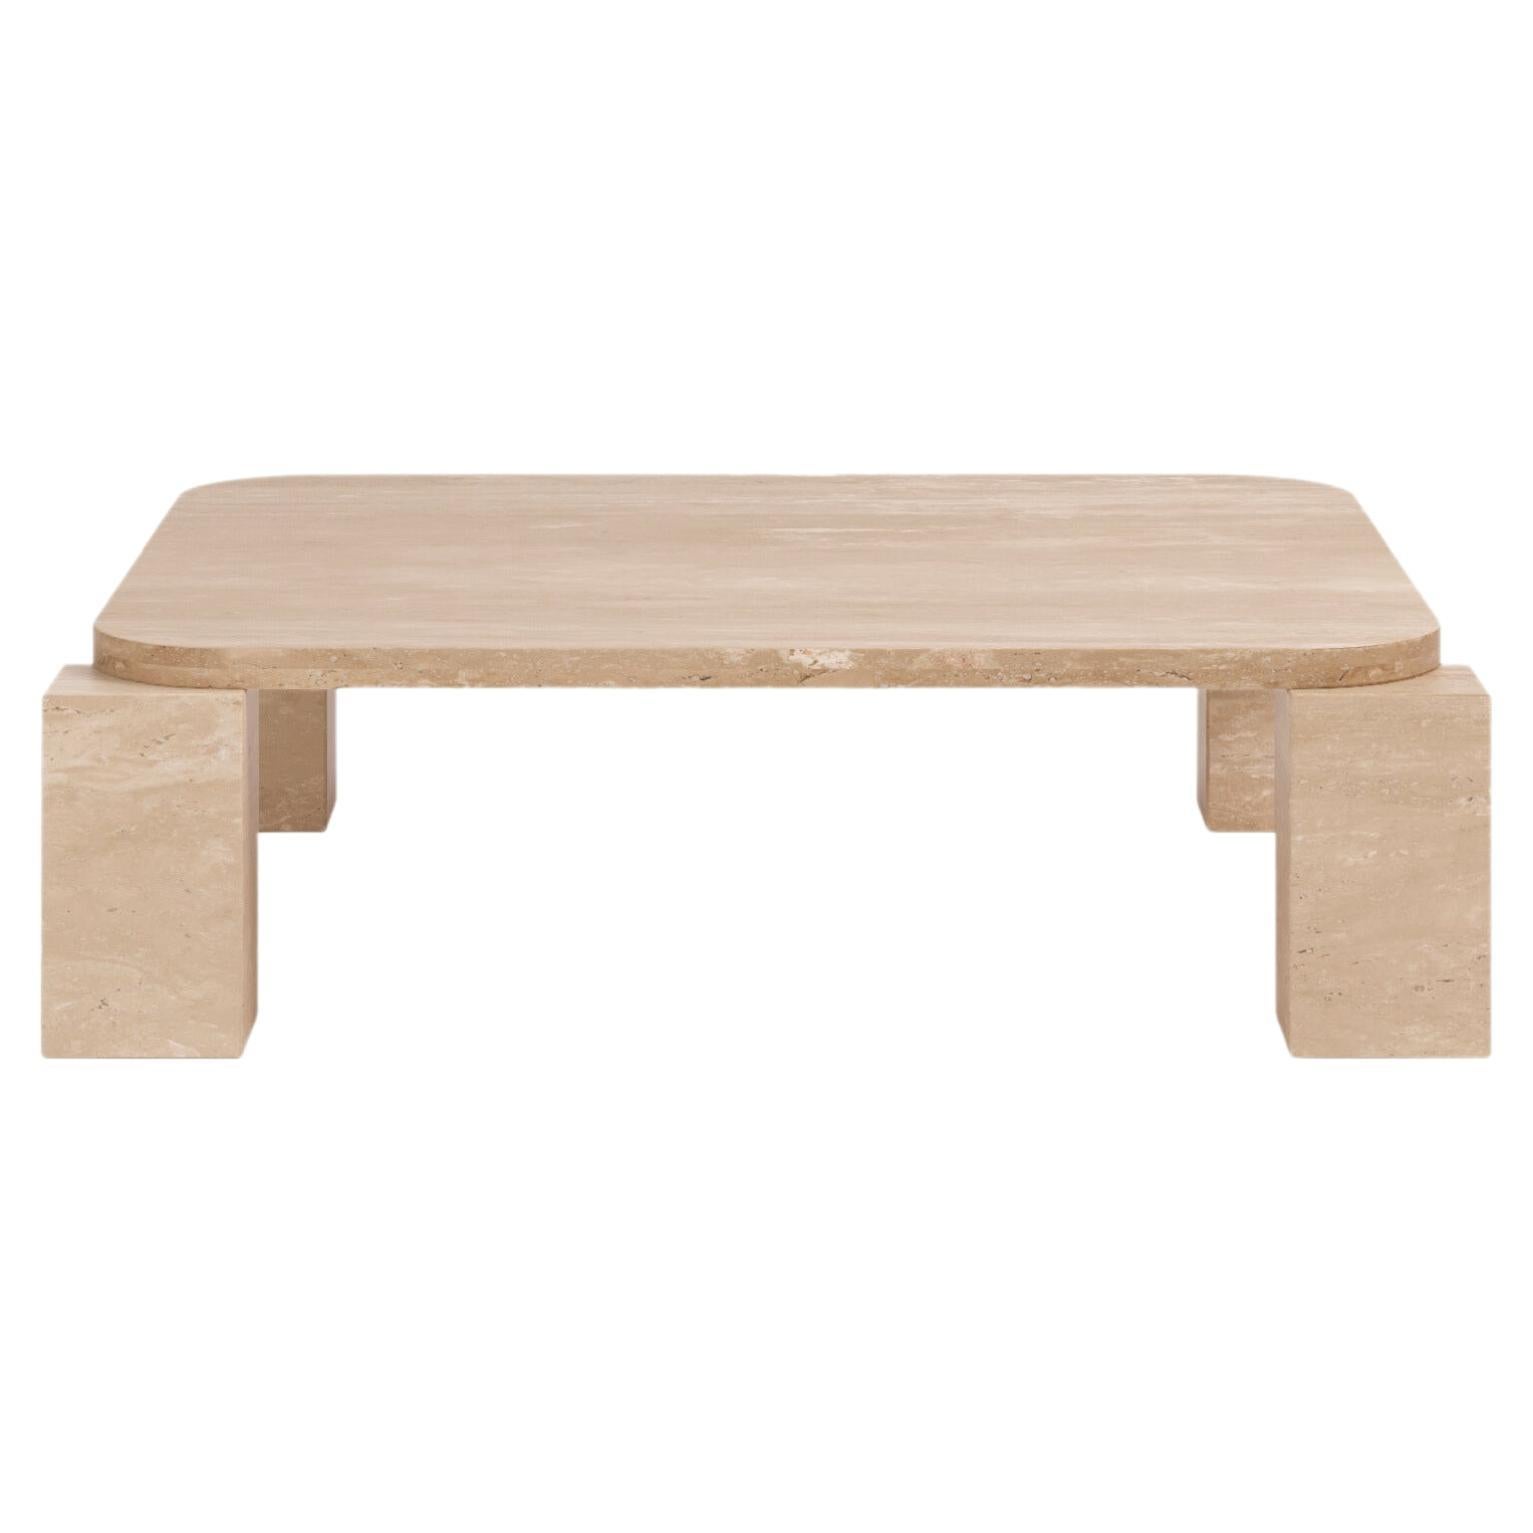 FORM(LA) Table basse carrée Cubo 44L x 44 "L x 14H Travertino Crema VC